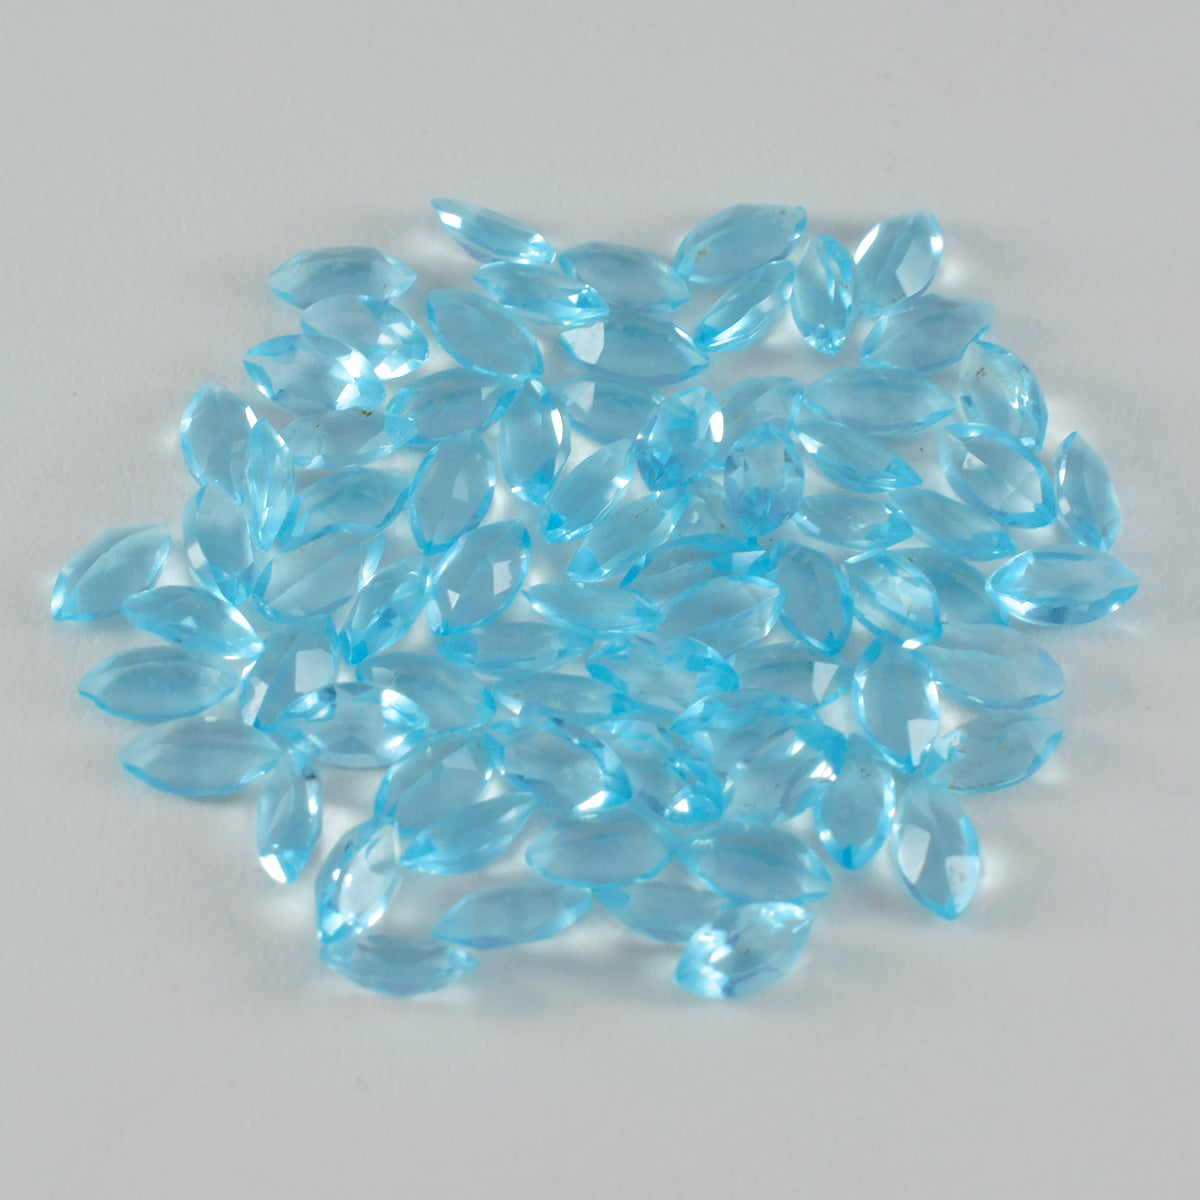 Riyogems 1PC Blue Topaz CZ Faceted 2x4 mm Marquise Shape superb Quality Loose Stone